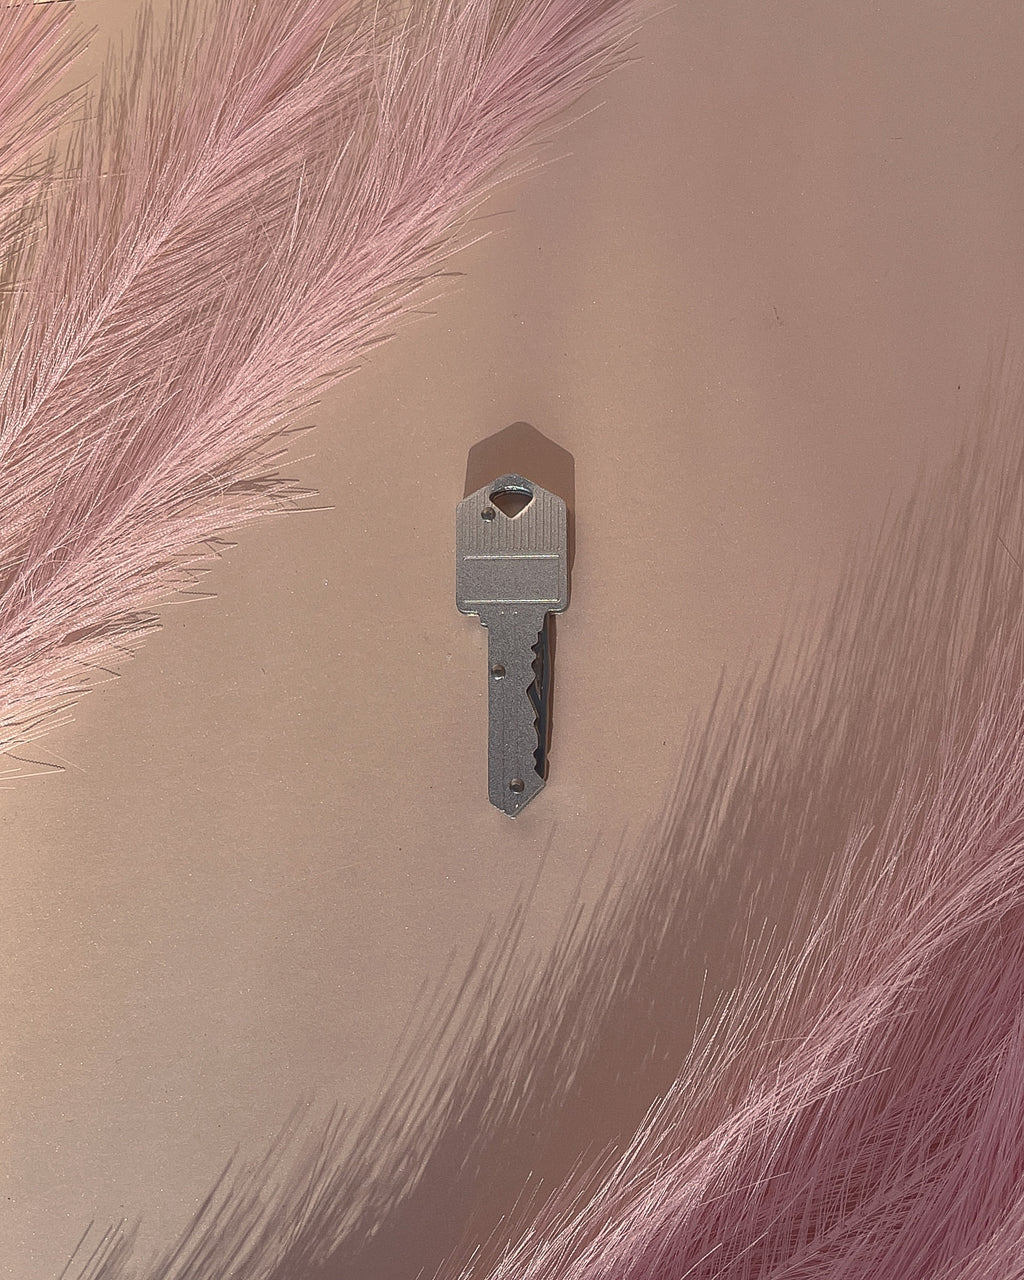 Discrete key